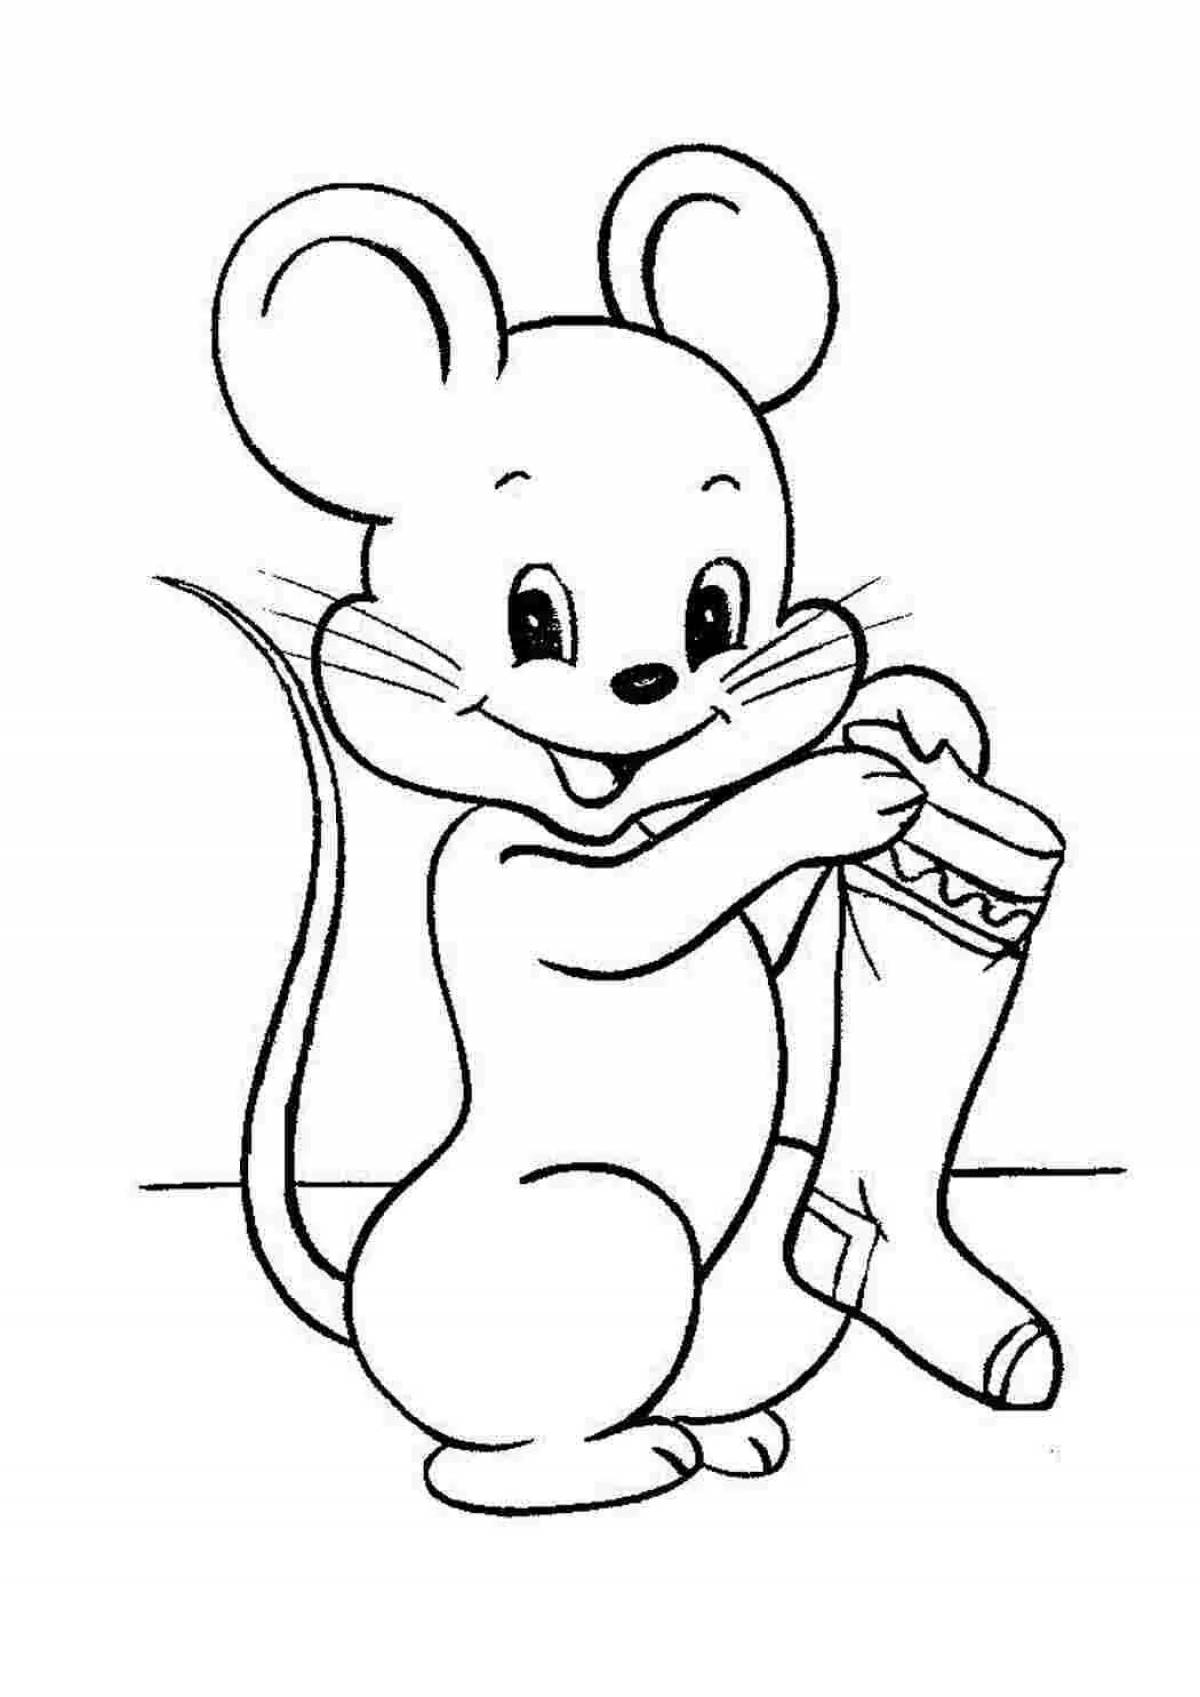 Буйный рисунок мыши